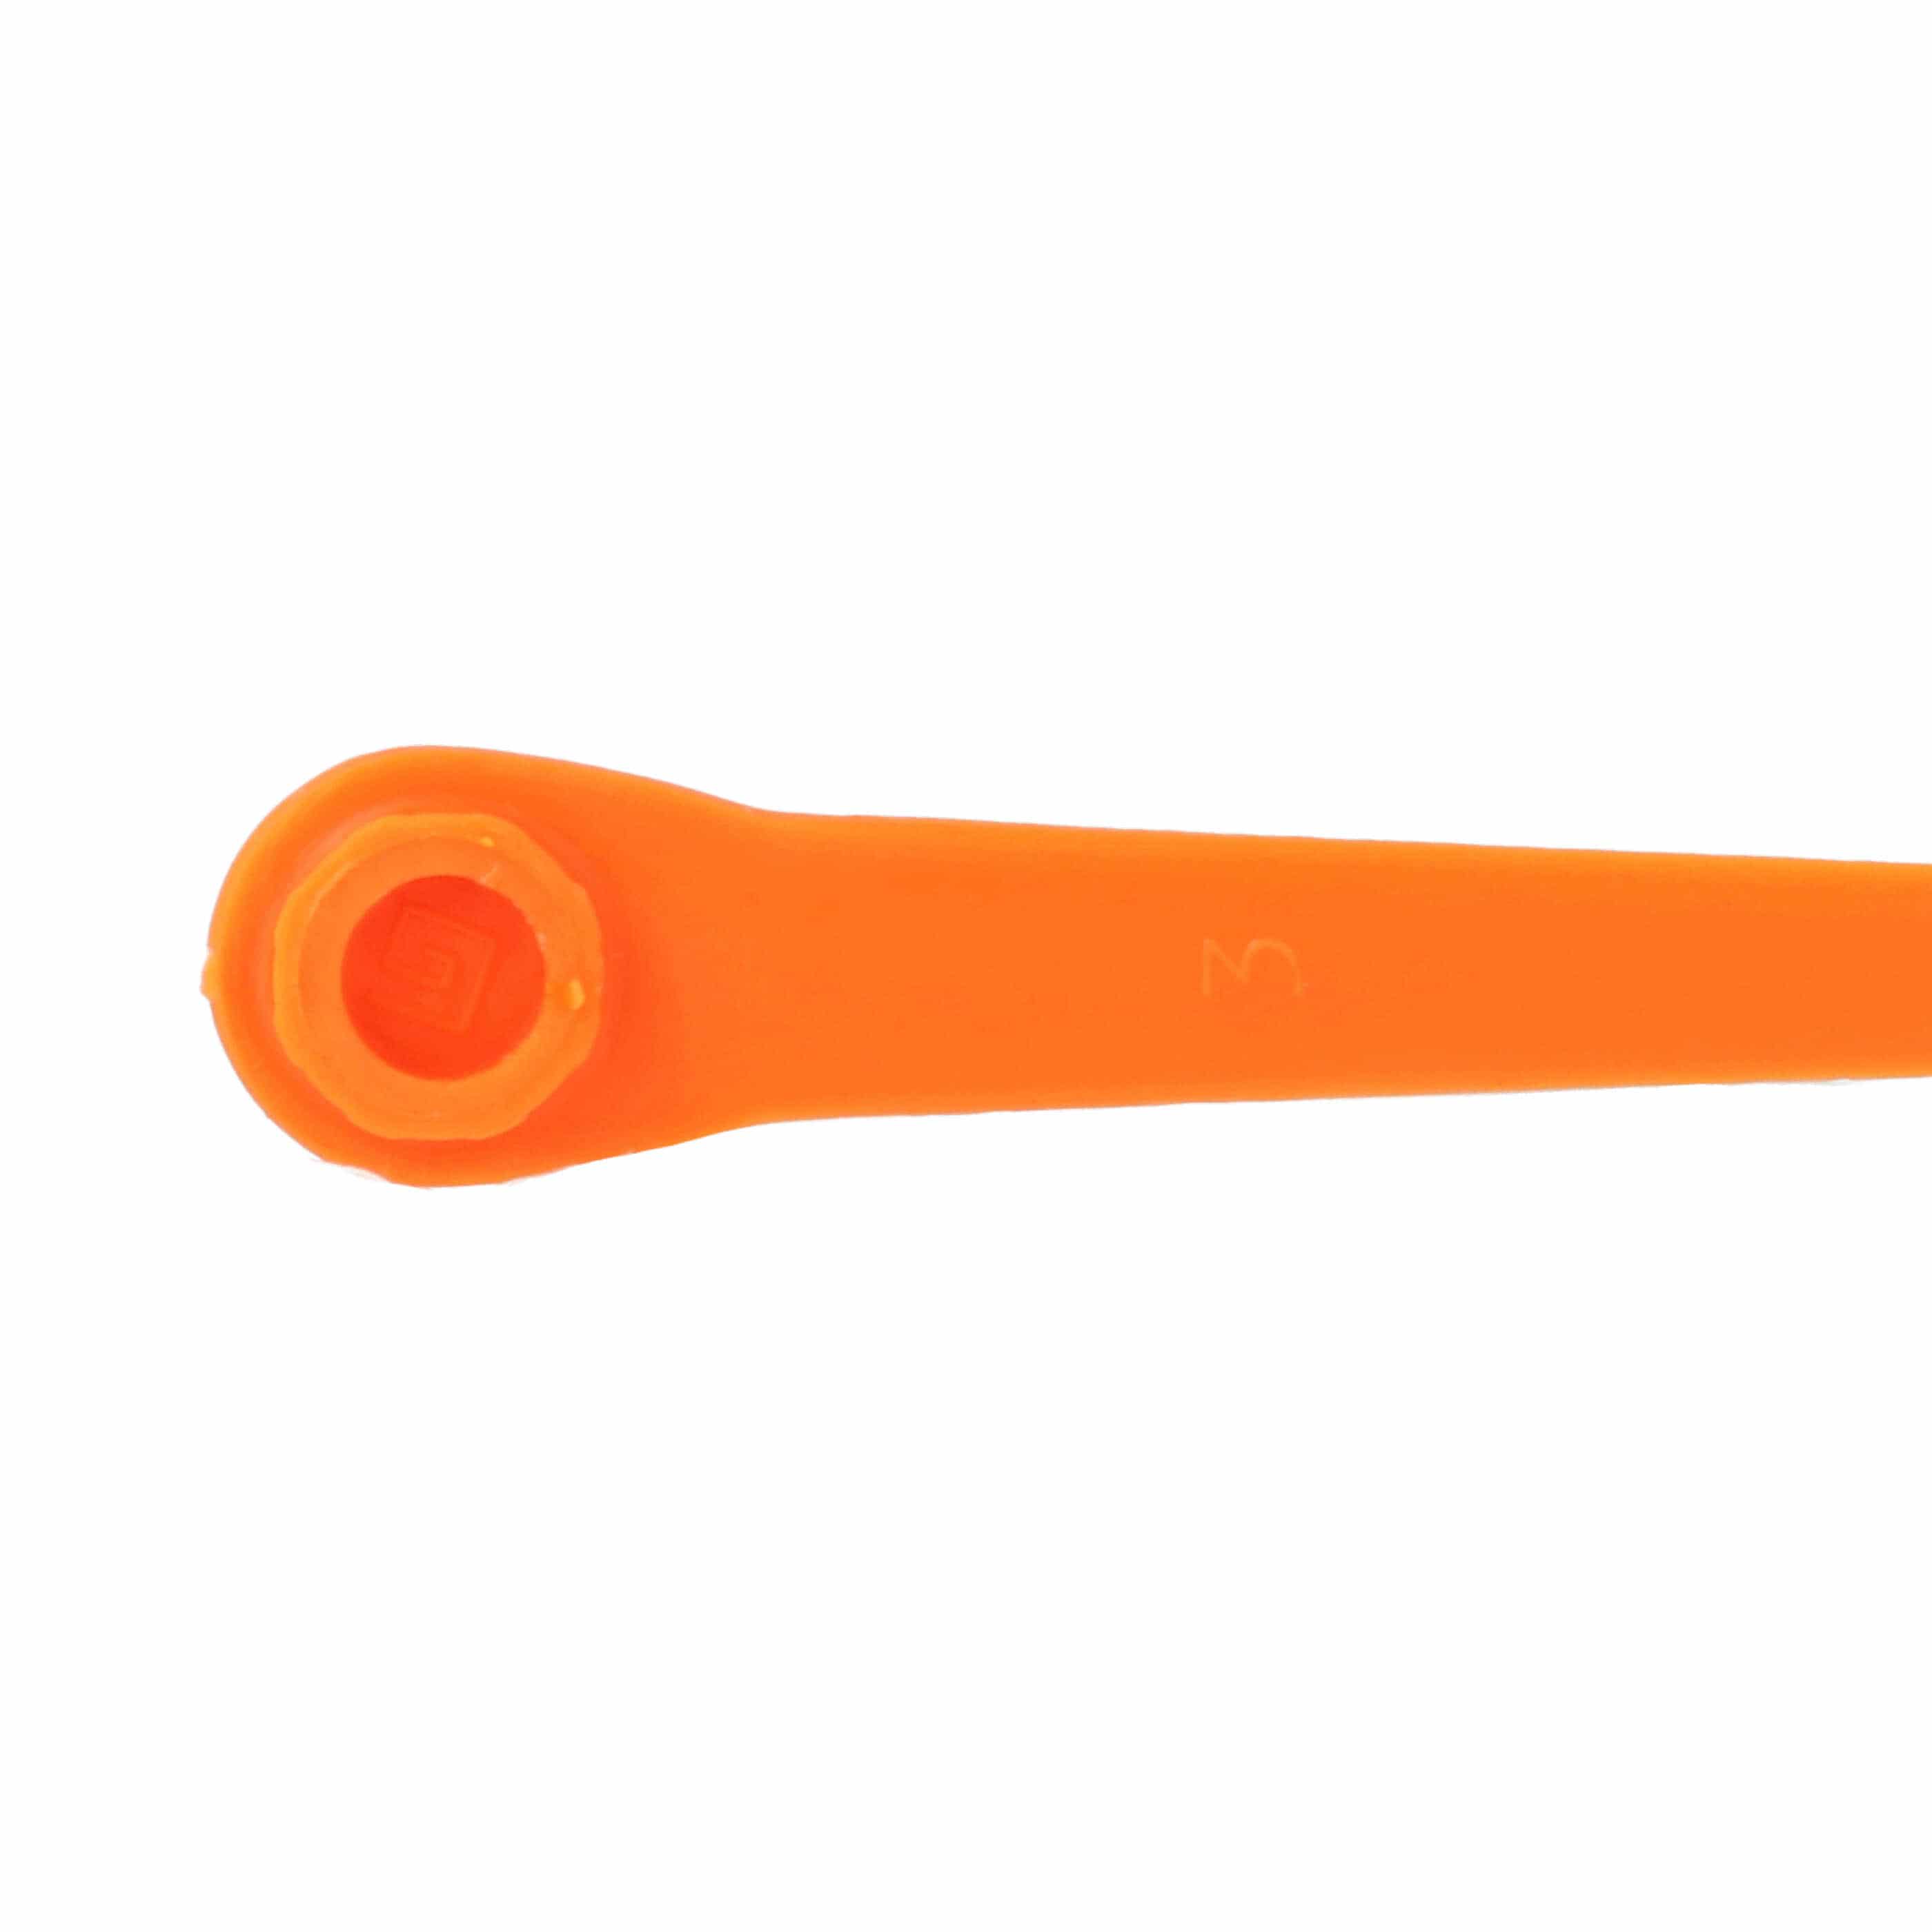 20x Lama sostituisce Gardena RotorCut 5368-20 per tagliaerba - arancione, plastica